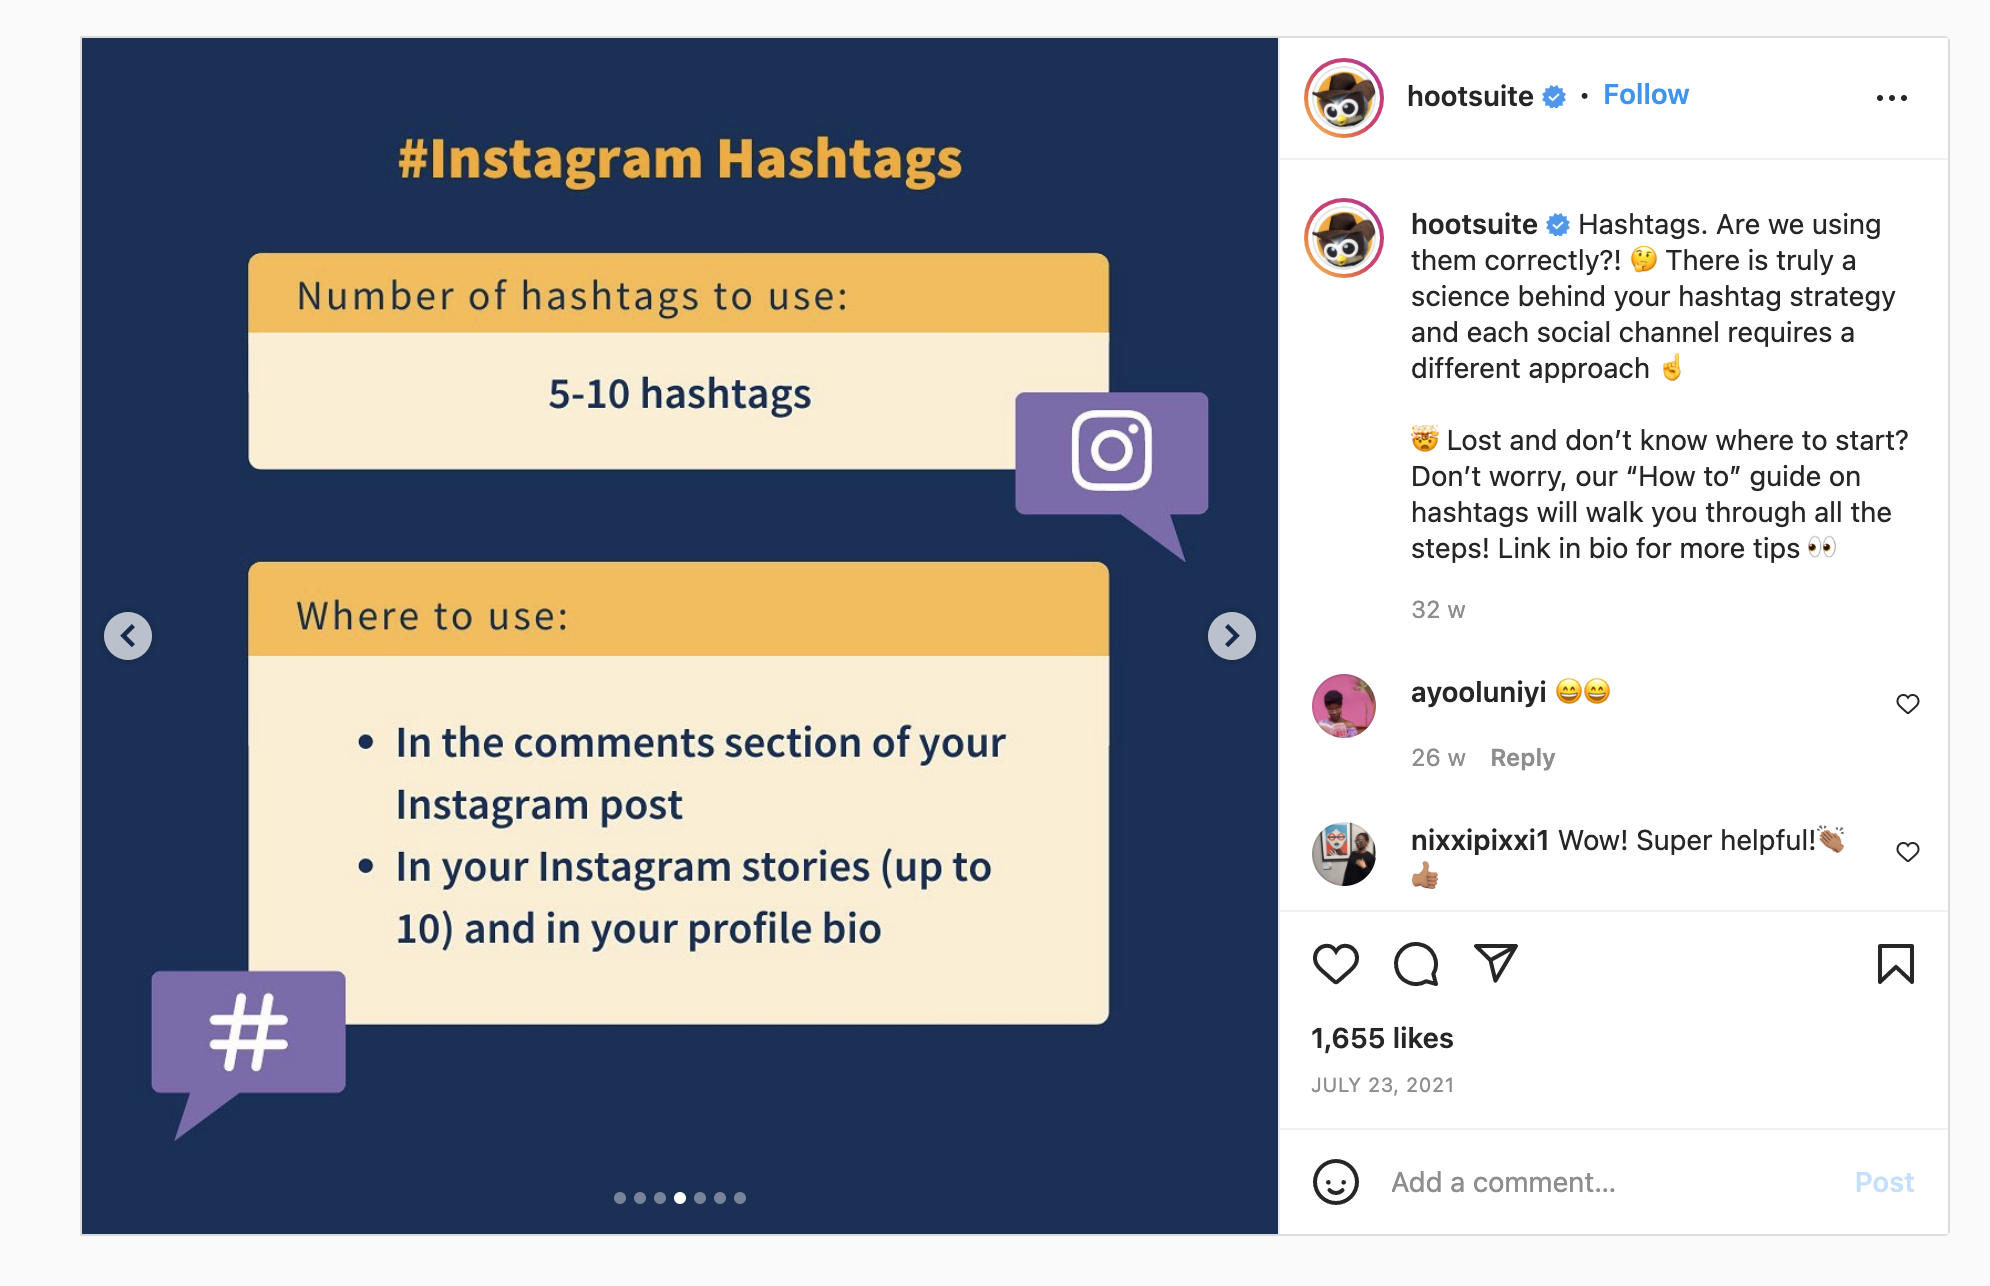 Instagram carousel on hashtag strategies